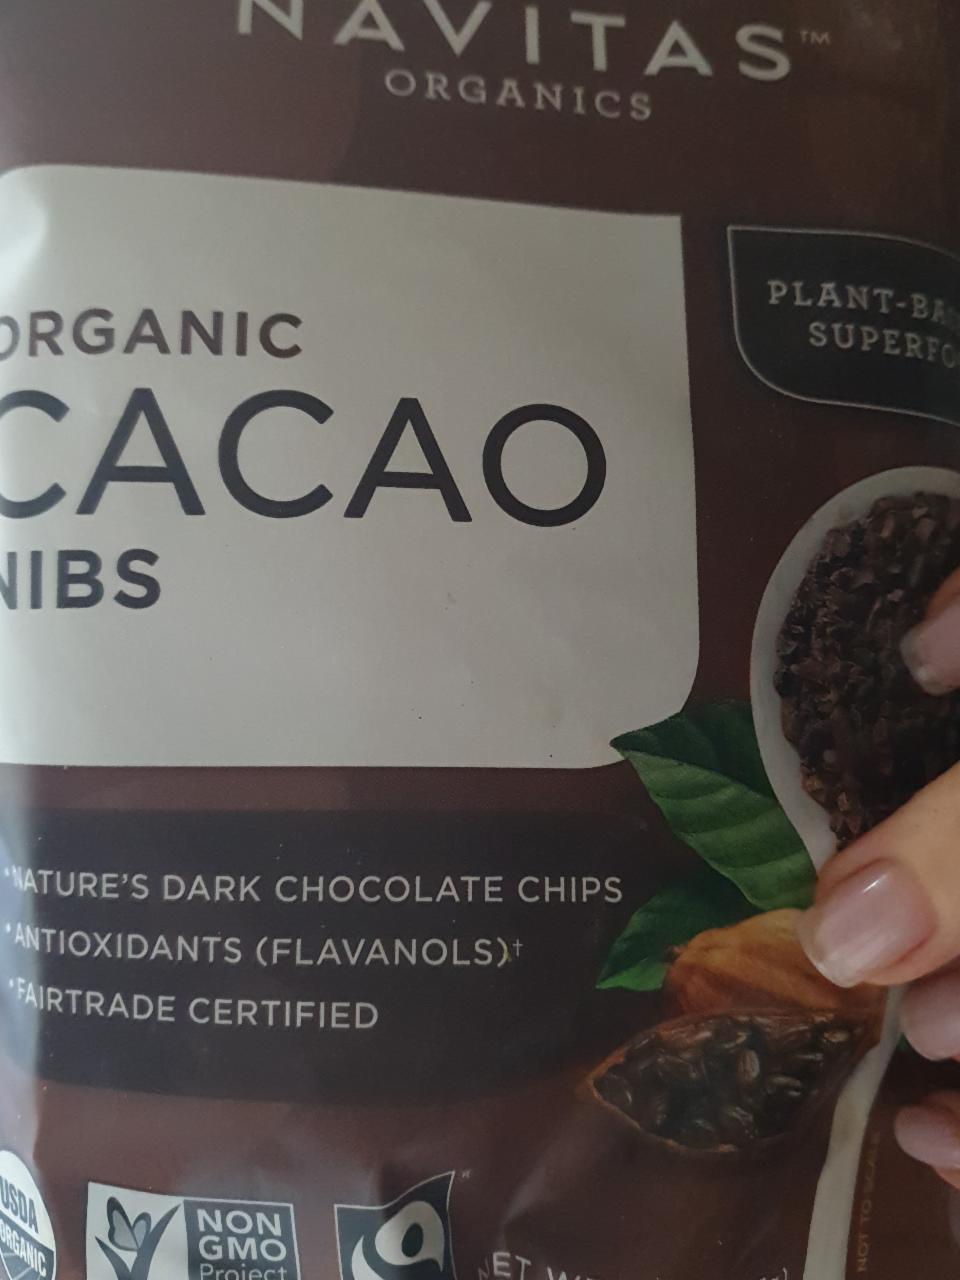 Фото - Органические кусочки какао-бобов Organic Cacao Nibs Navitas